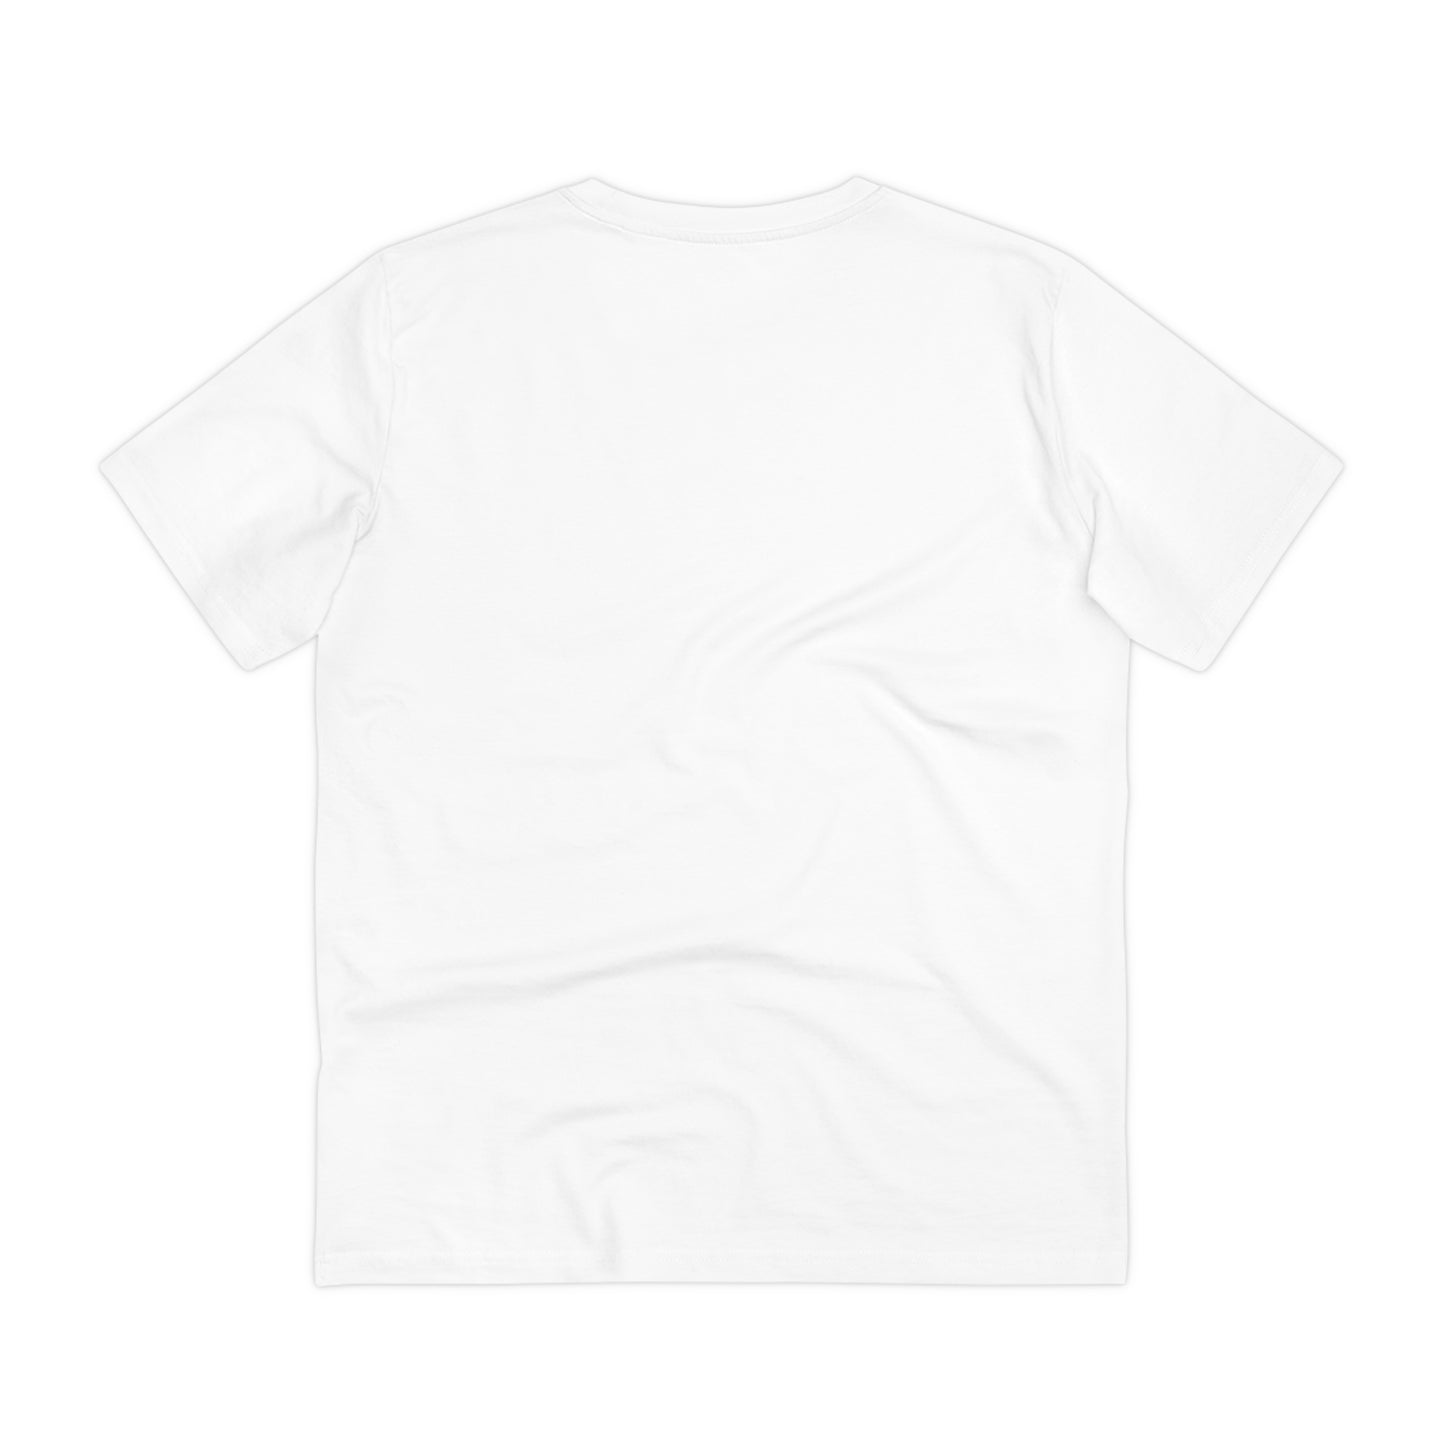 Justabarth T-shirt #2